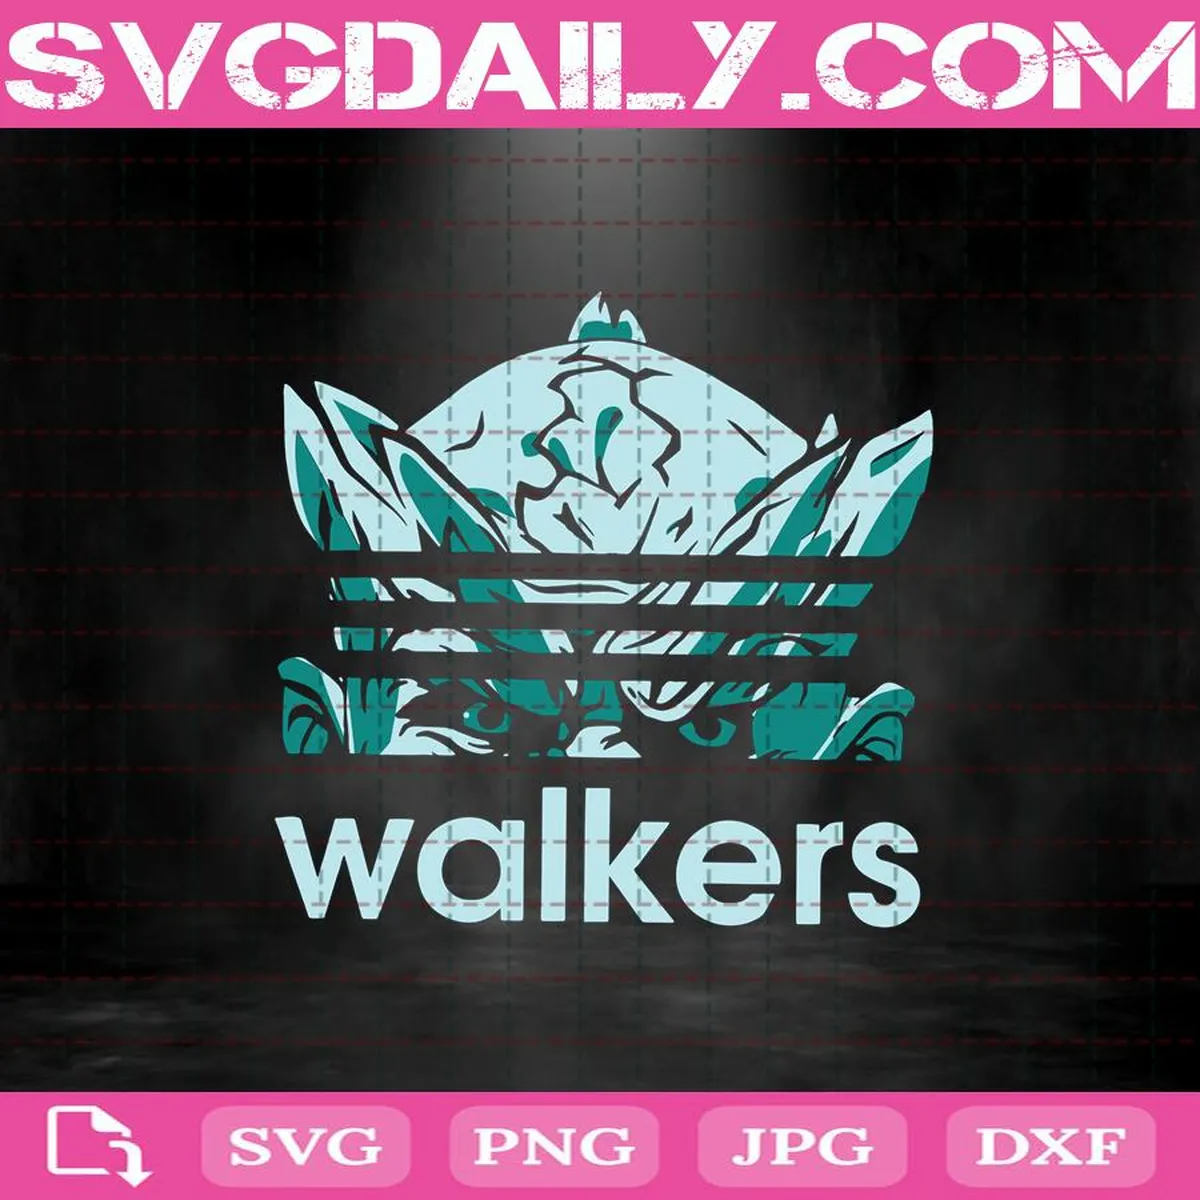 Walkers Svg, Cricut Files, Clip Art, Instant Download, Digital Files, Svg, Png, Eps, Dxf